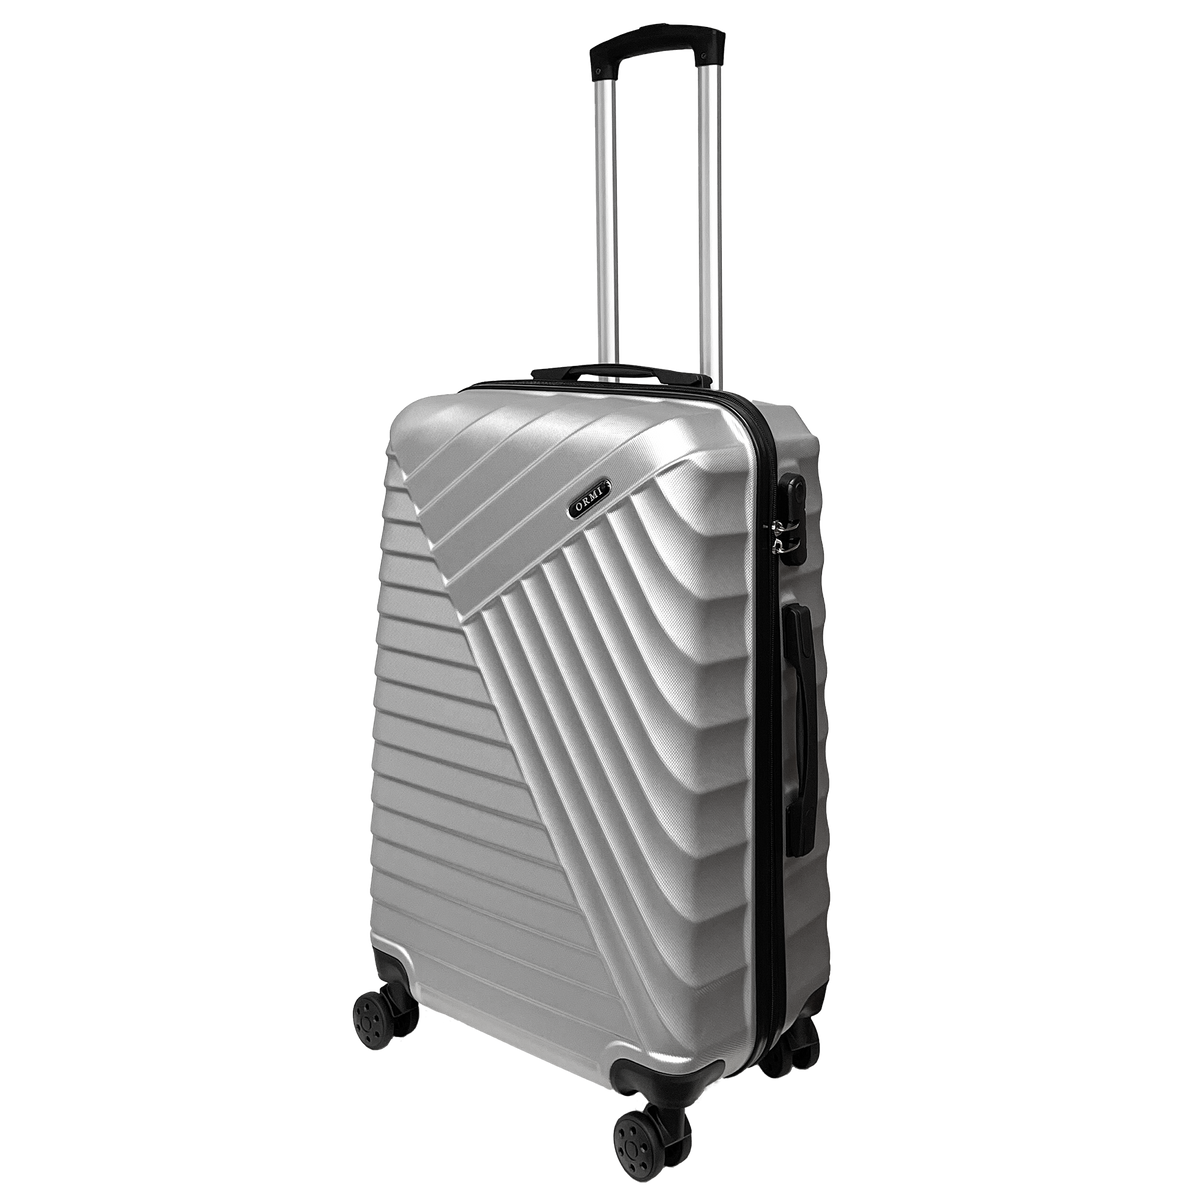 Střední kufr STSHLine z odolného ABS, rozměry 65x43x26 cm, se 4 dvojitými kolečky otočnými o 360° - Lehký a odolný